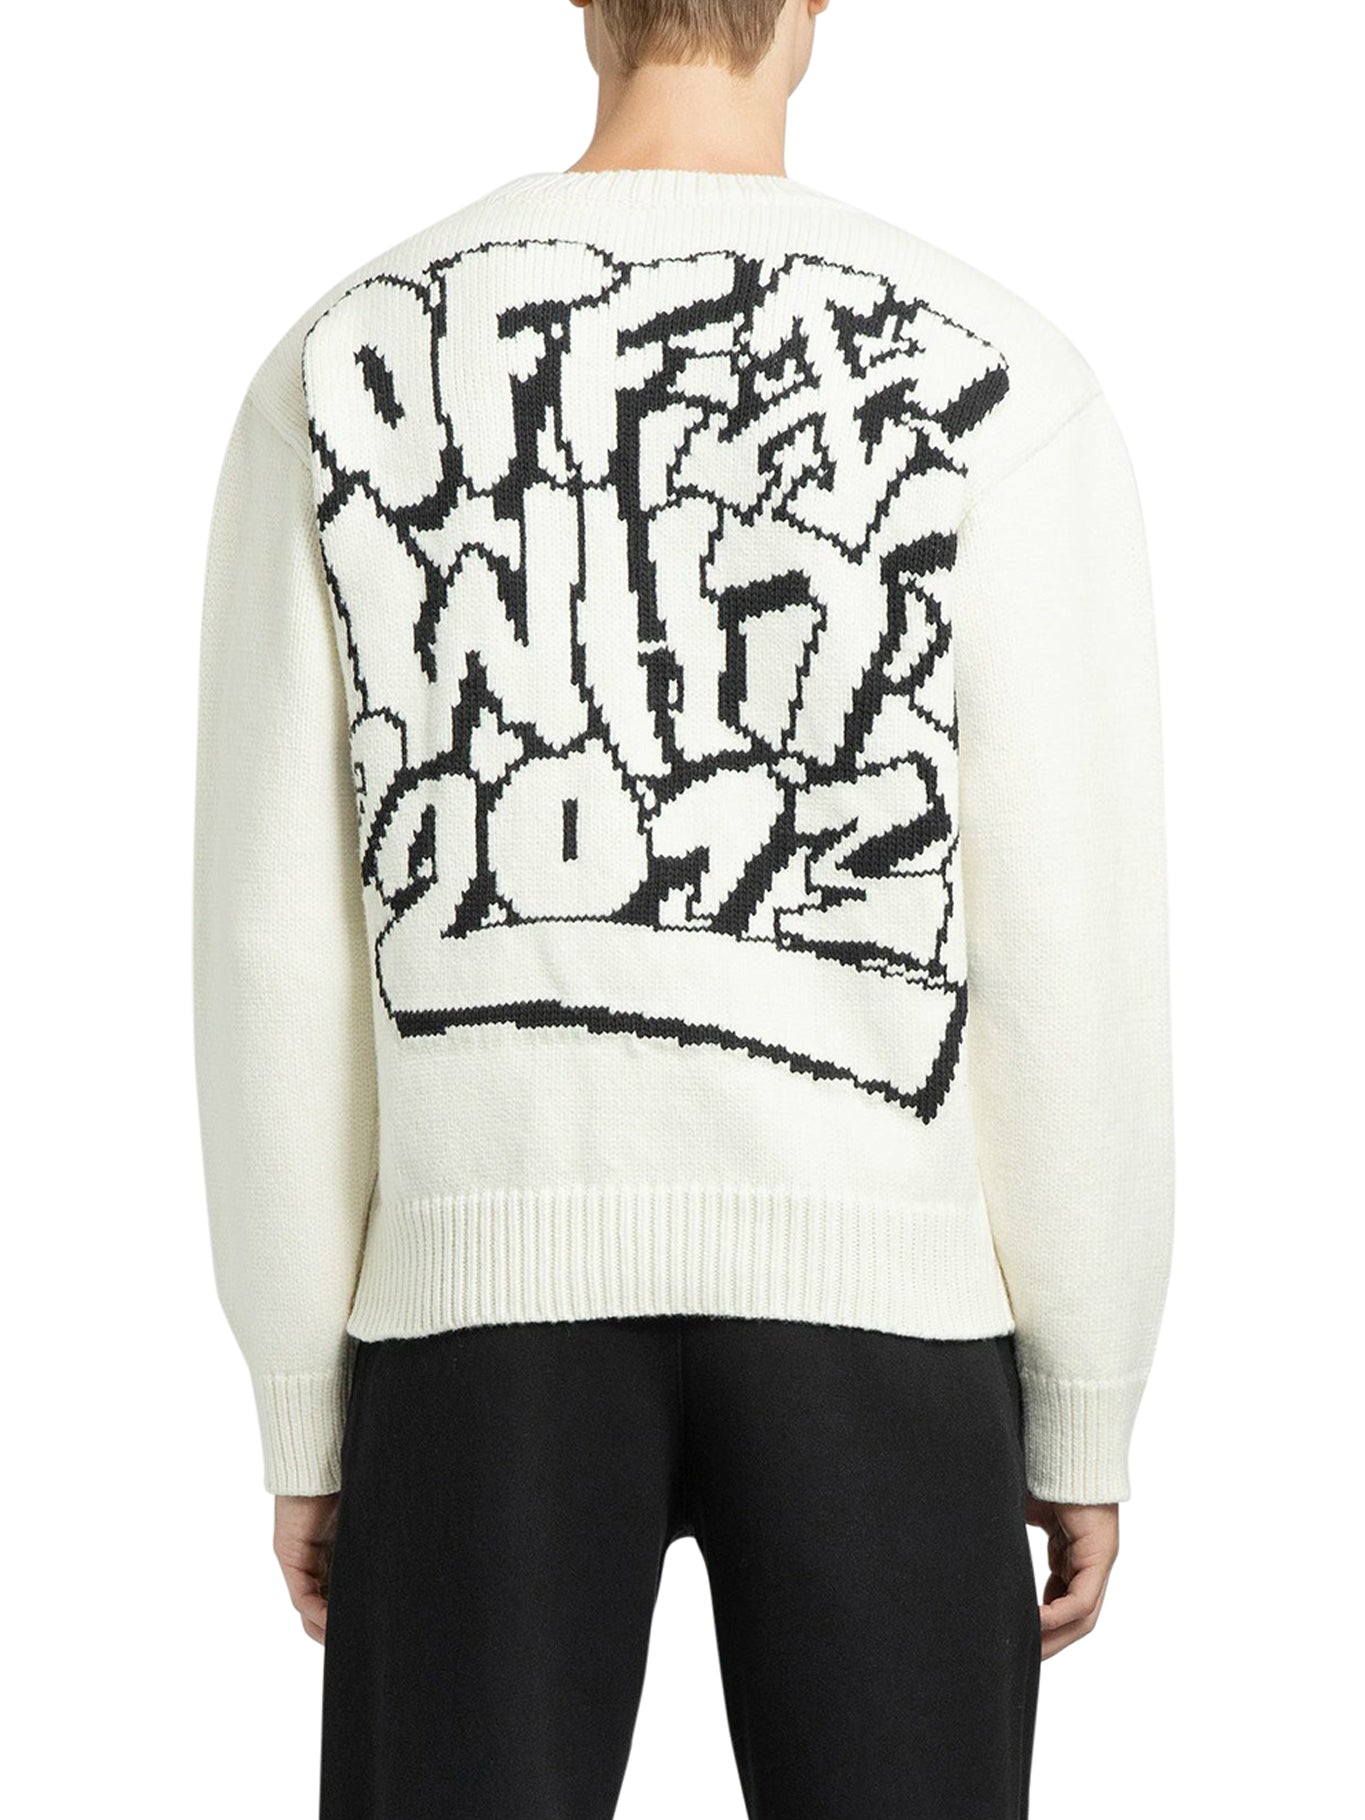 Off-White c/o Virgil Abloh Men's Sweater - Natural - Crew Neck